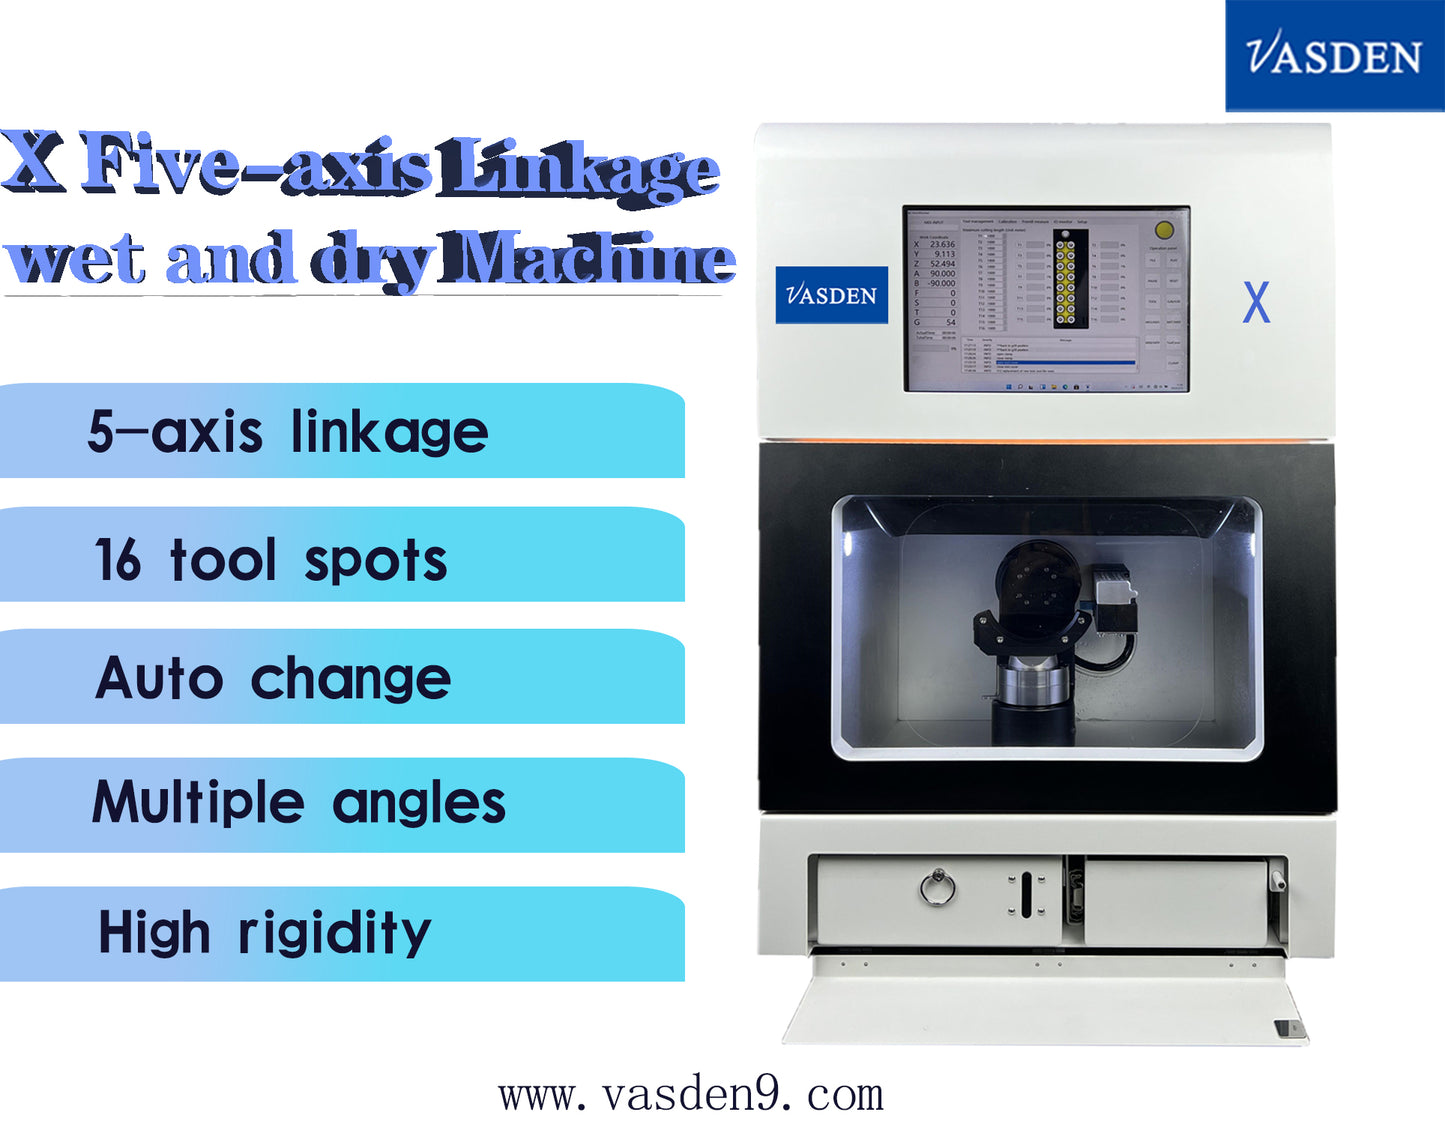 Vasden X five-axis linkage wet and dry denture cutting machine Dental cadcam milling machine